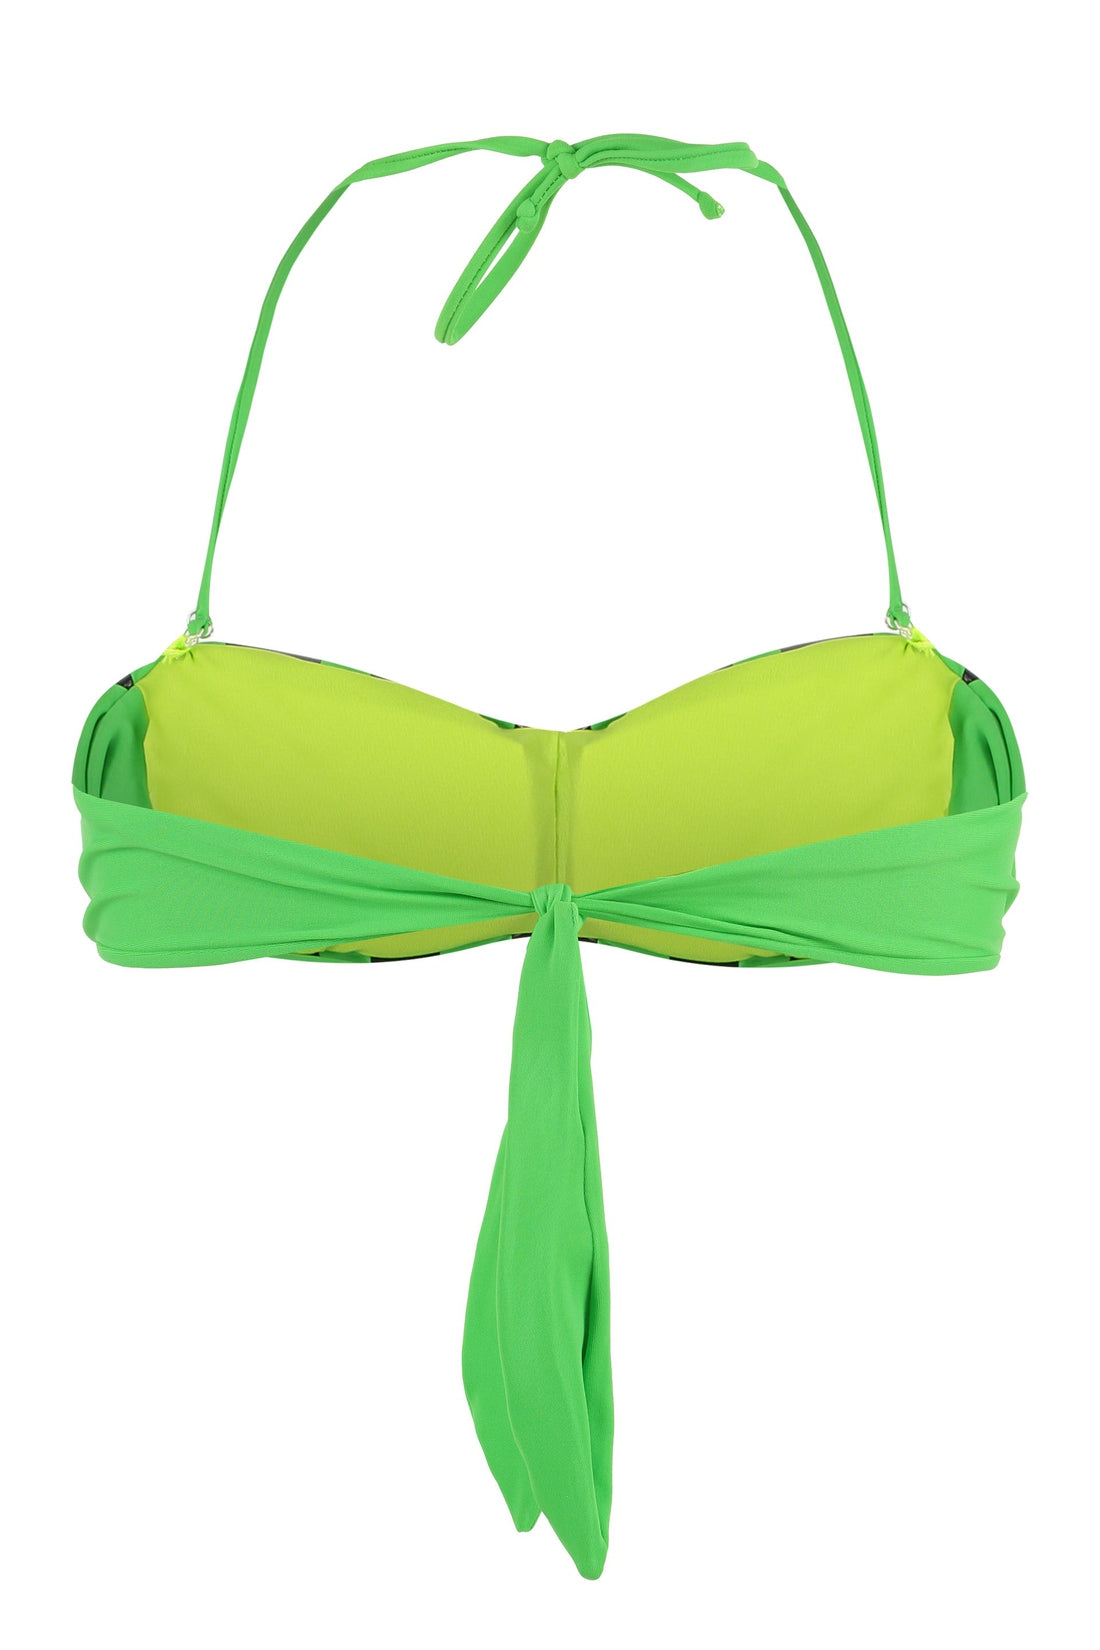 Moschino-OUTLET-SALE-Bandeau bikini top-ARCHIVIST